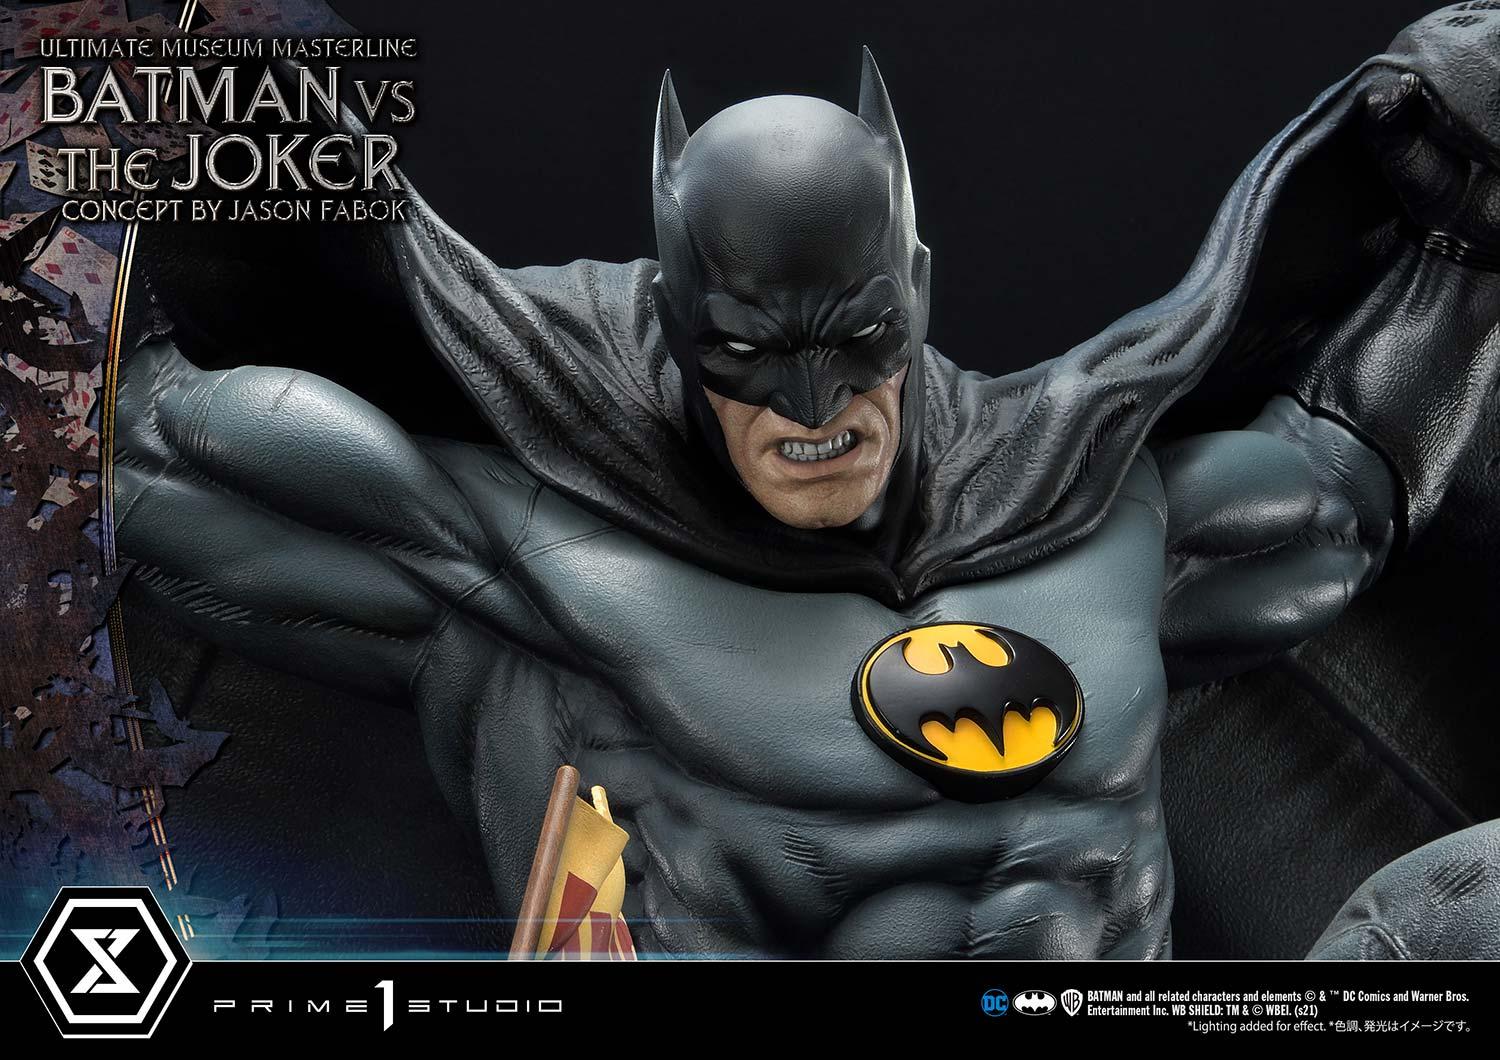 DC COMICS The JOKER 1/4 SCALE MUSEUM STATUE Figurine Joker Batman Bust  Figure